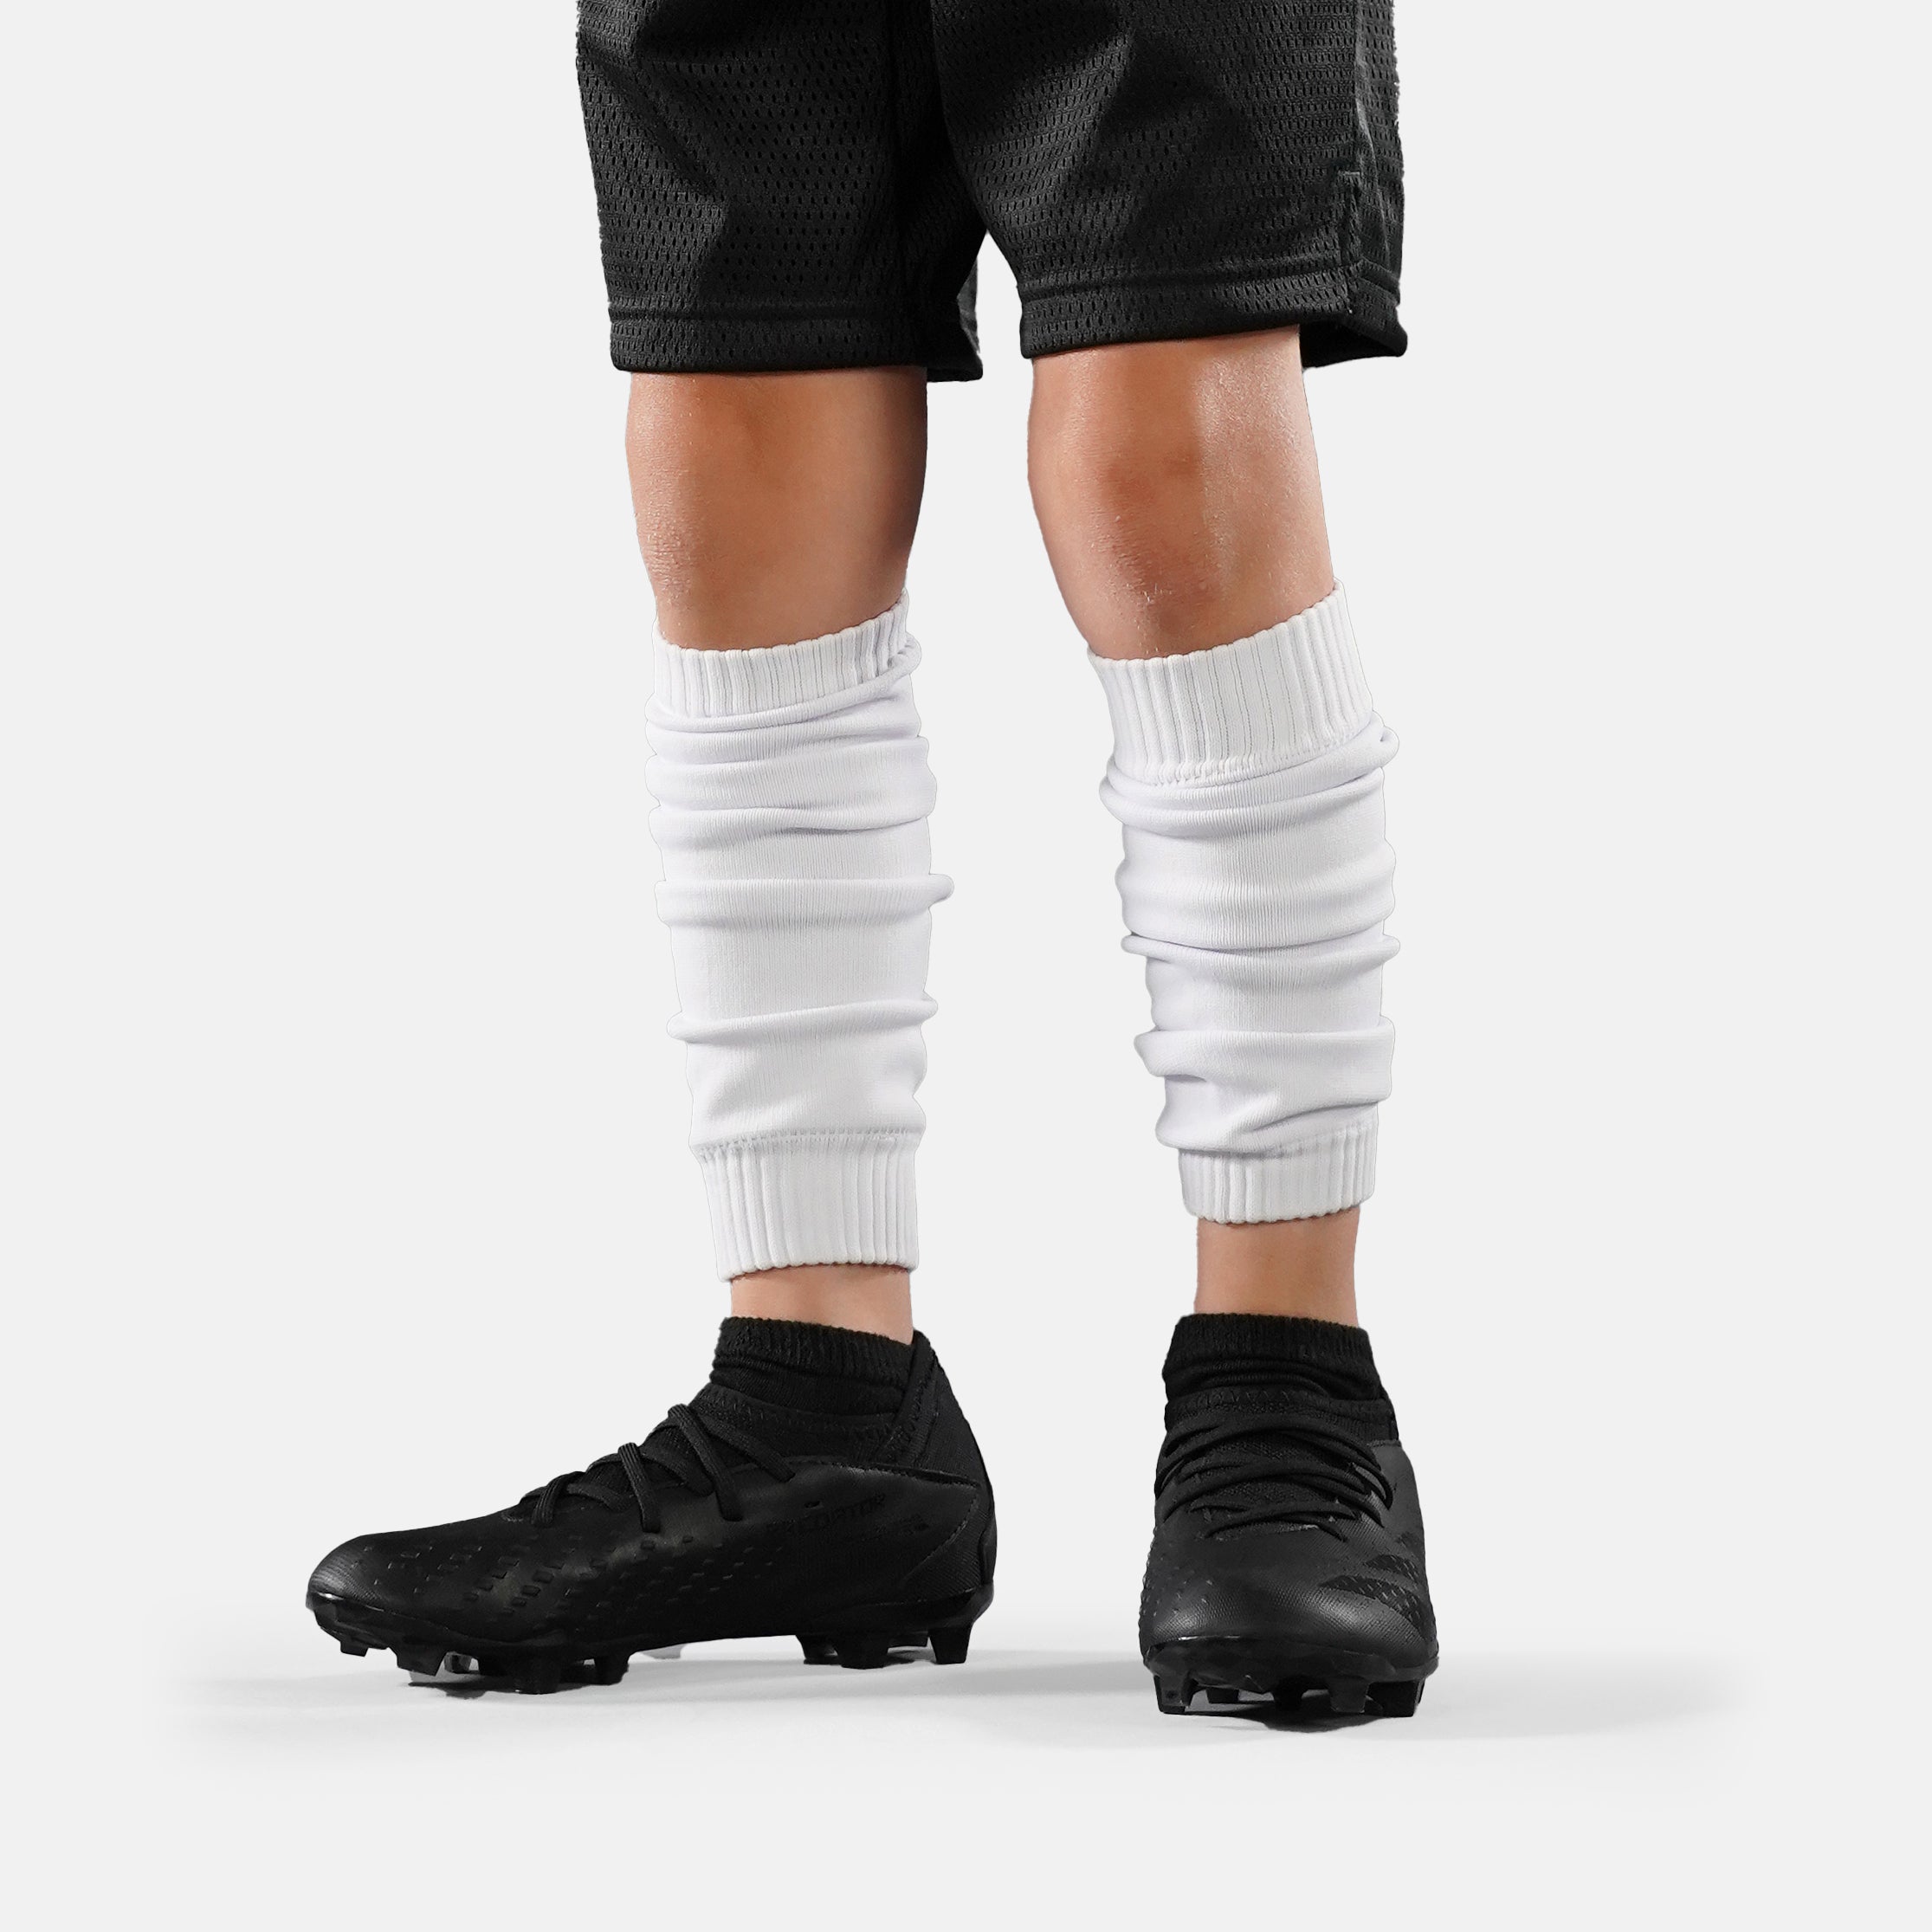  SLEEFS Calf Compression Leg Sleeves - Football Leg